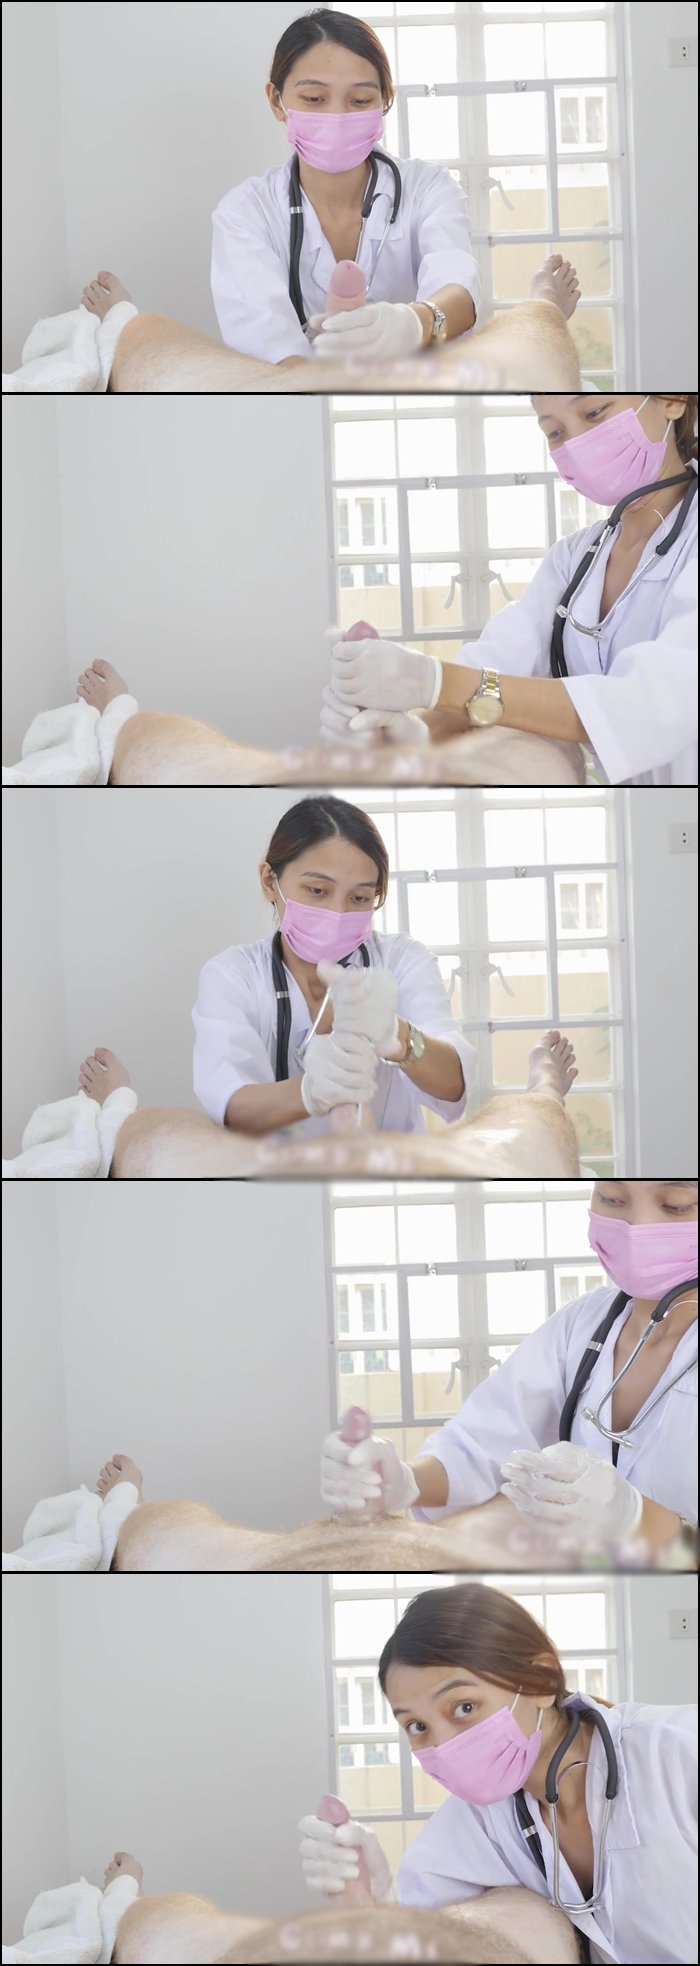 Forumophilia - PORN FORUM : Young Asian Nurse Gives Covid-19 Patient Nice  Handjob